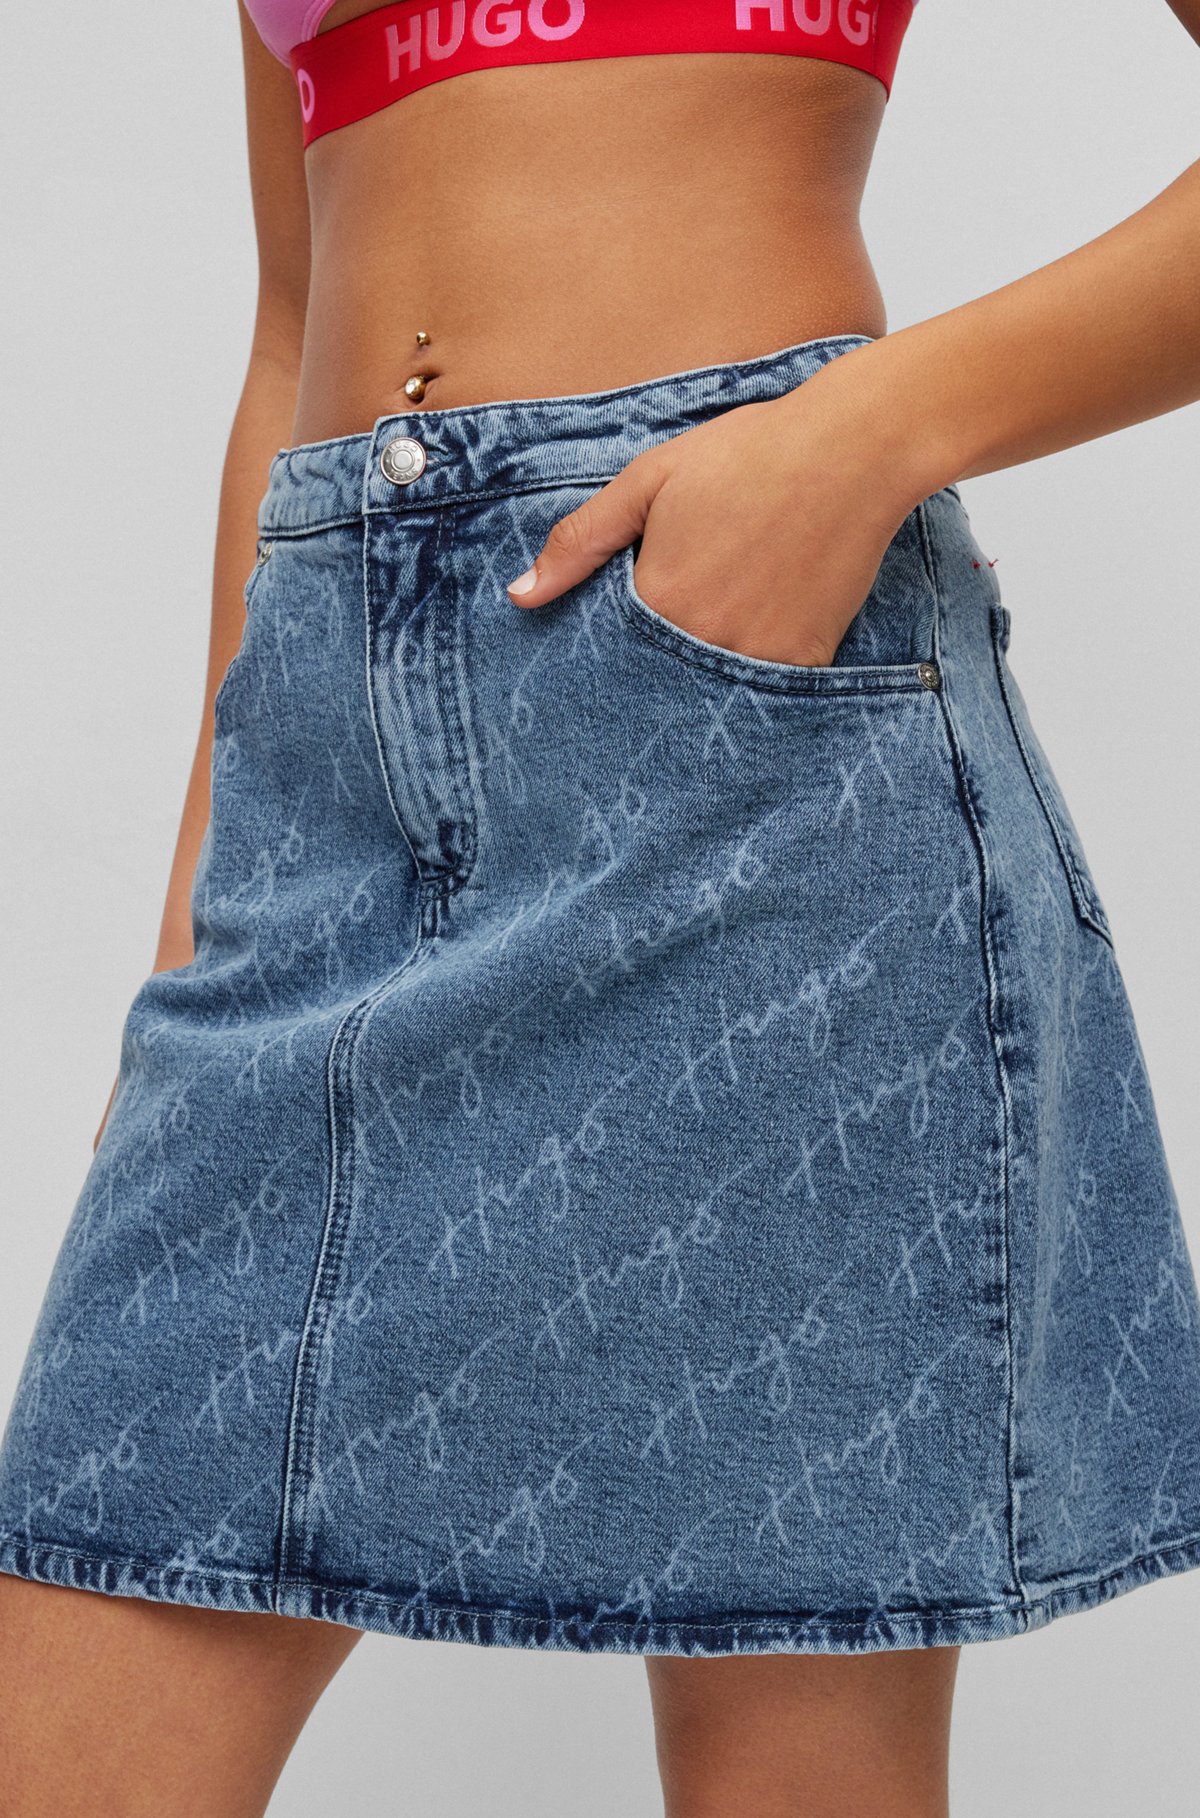 HUGO - Slim-fit denim mini skirt with handwritten logos